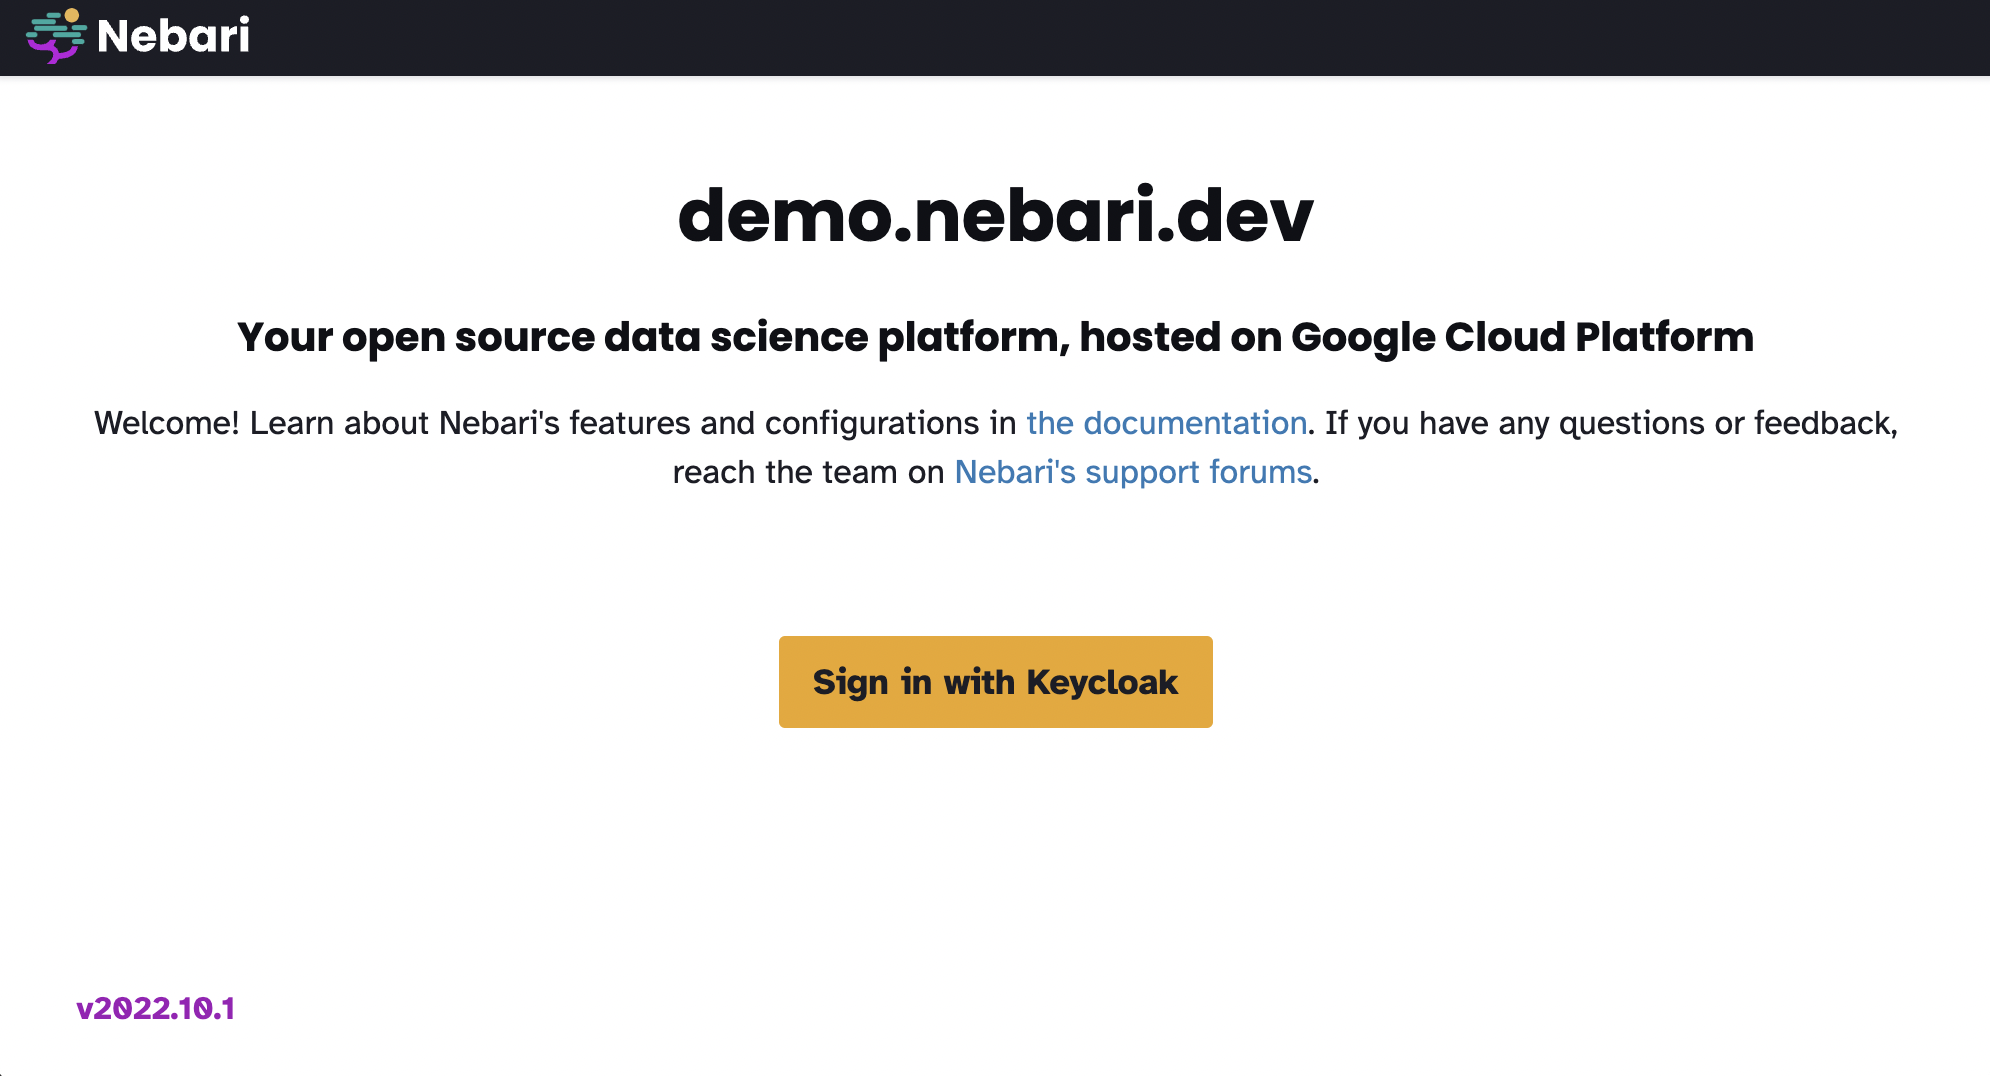 Nebari - Log in to Keycloak page